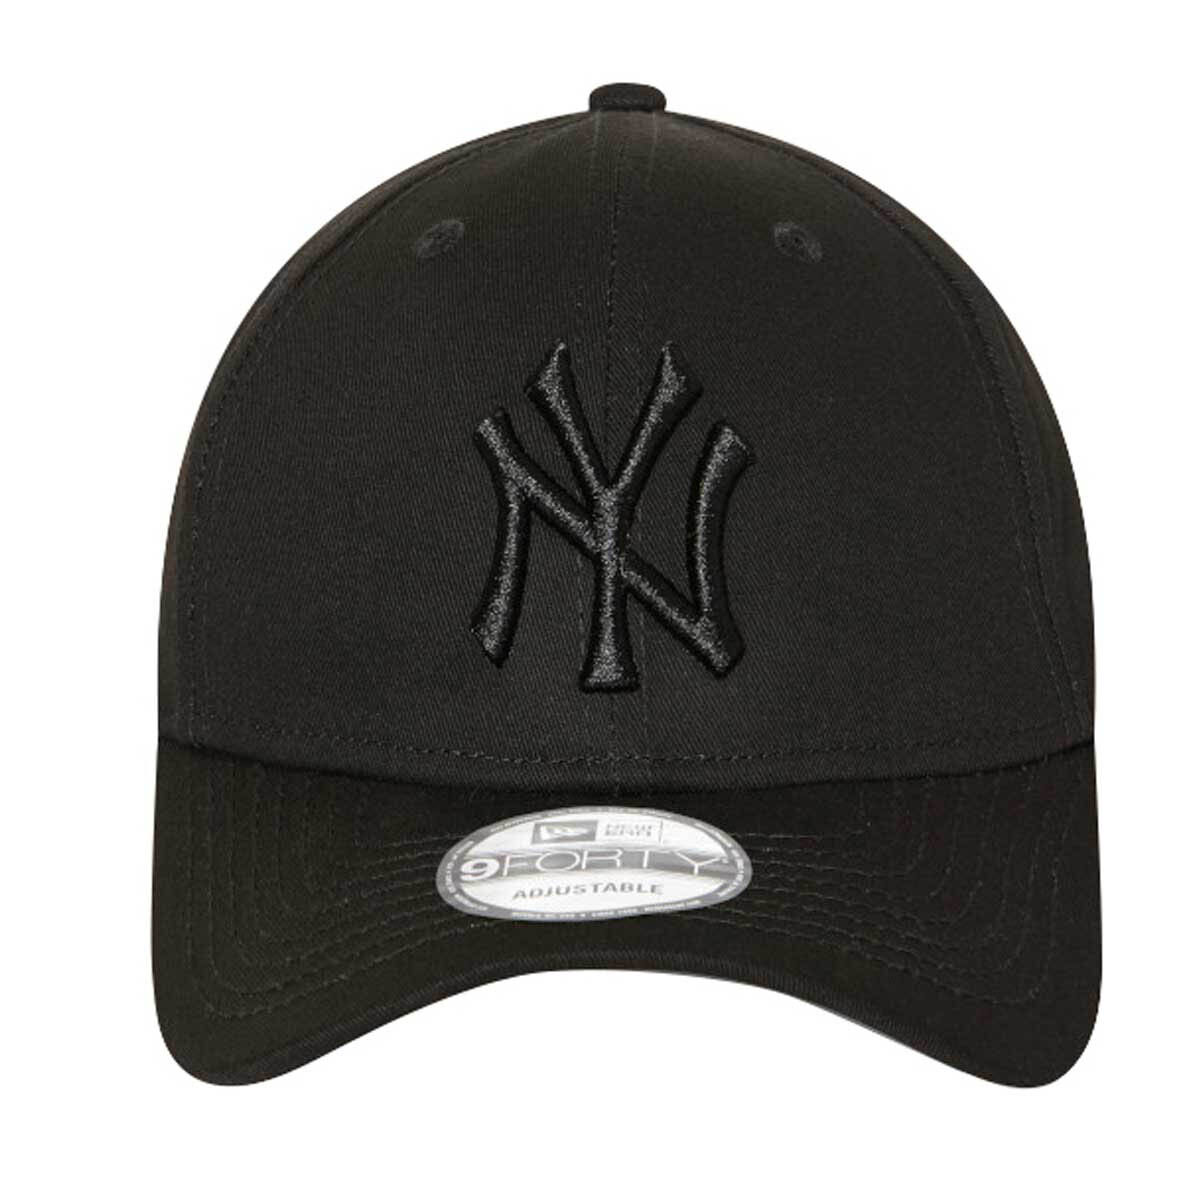 Mitchell & Ness Youth New York Yankees Derek Jeter Navy Cooperstown Collection Mesh Batting Practice Jersey XL 18/20